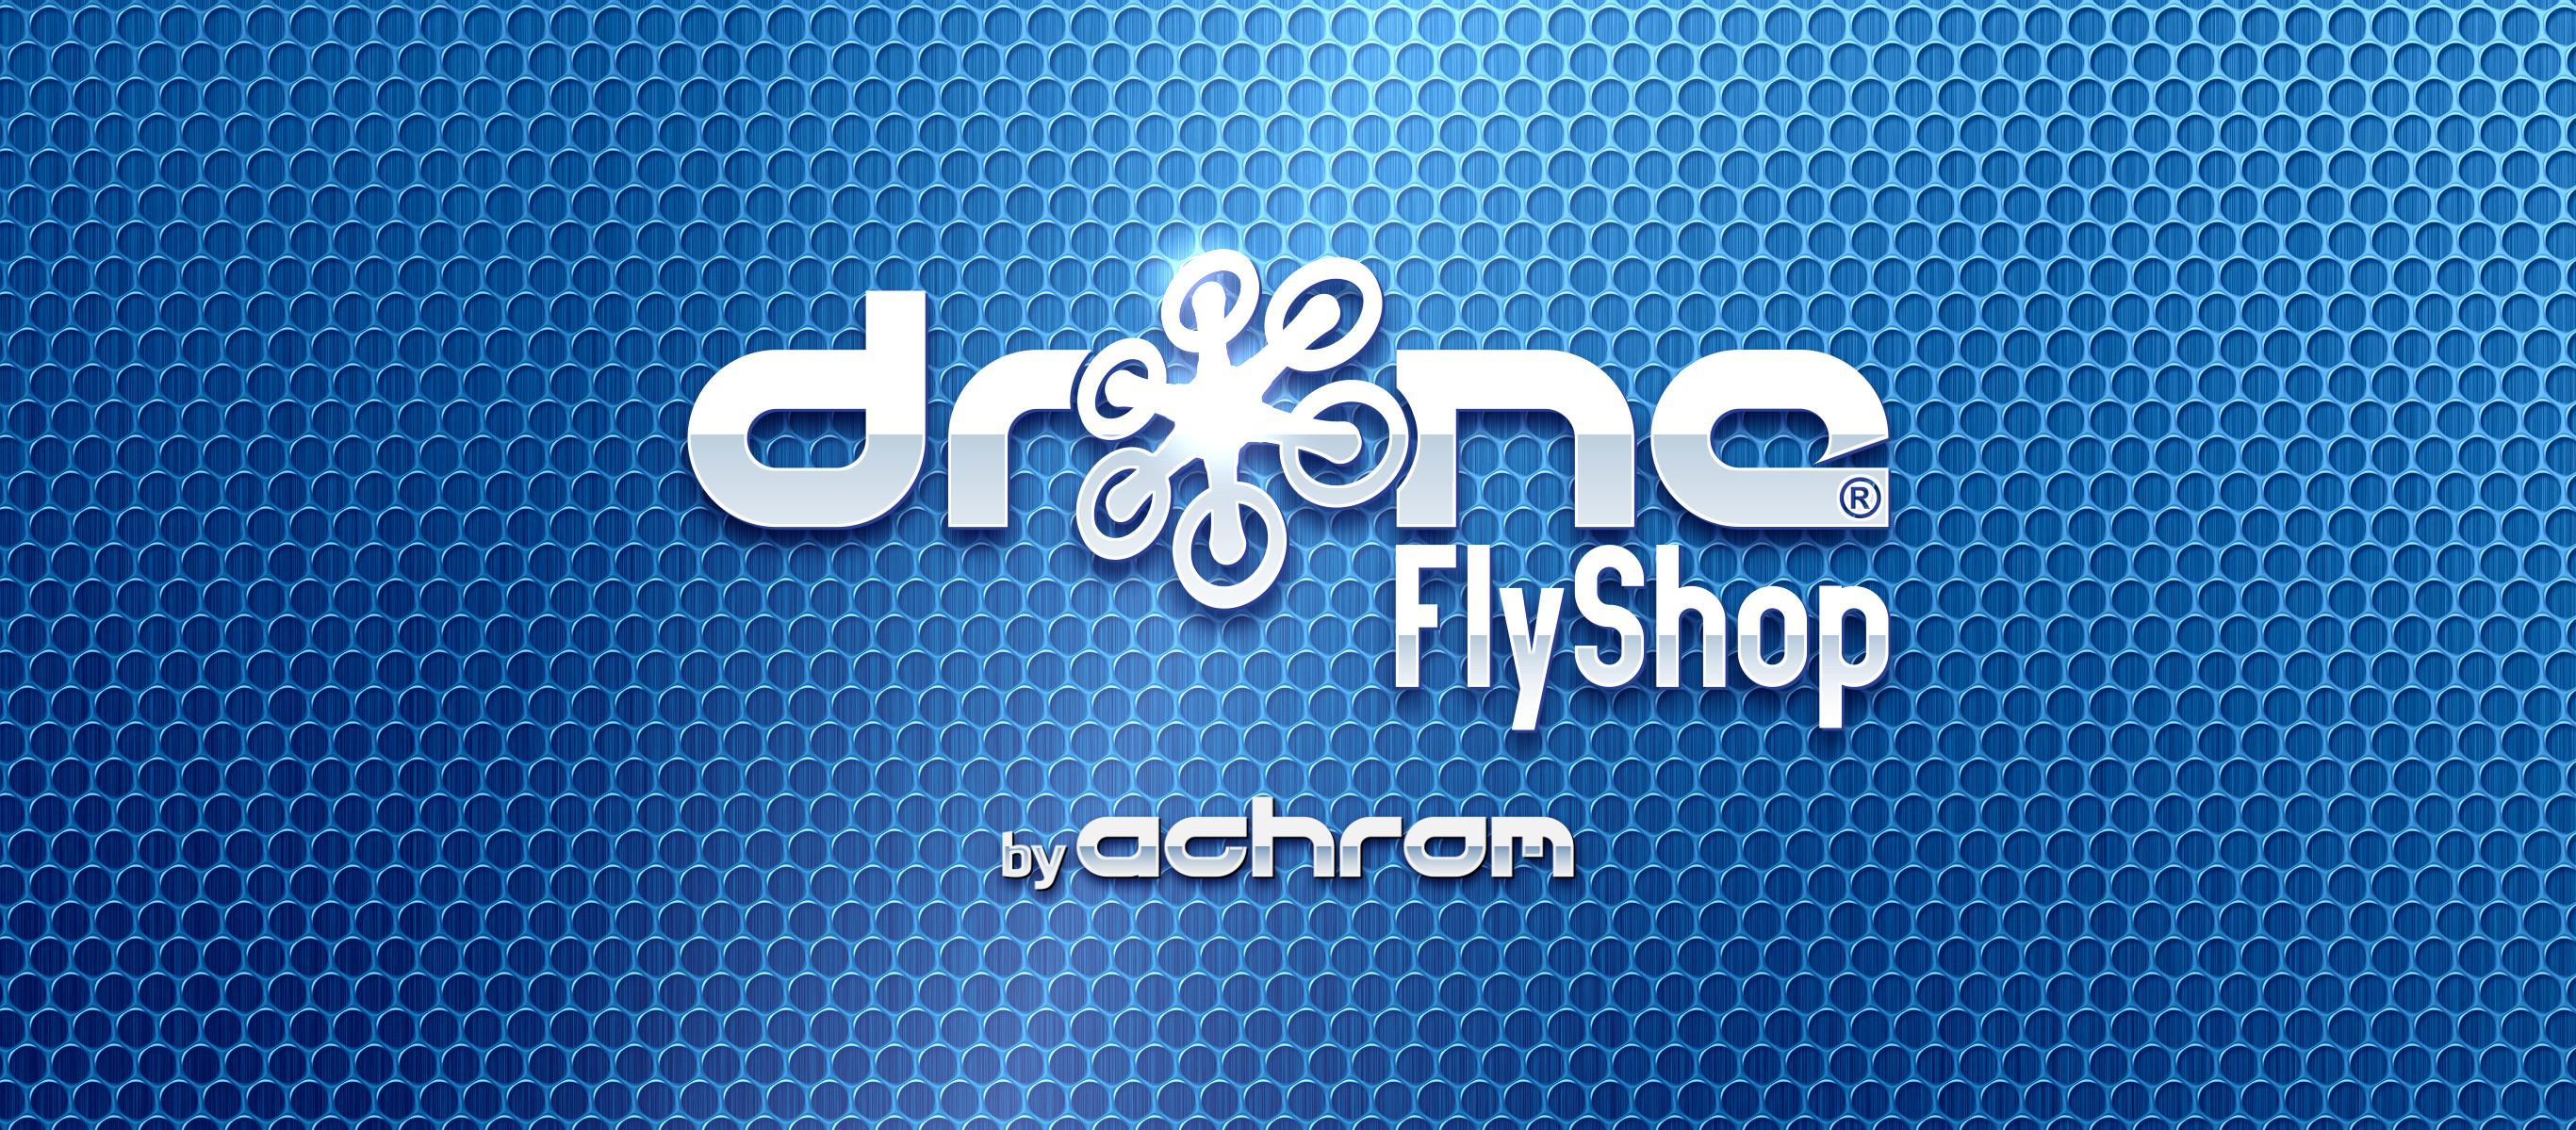 DroneFly.shop by Achrom Logo